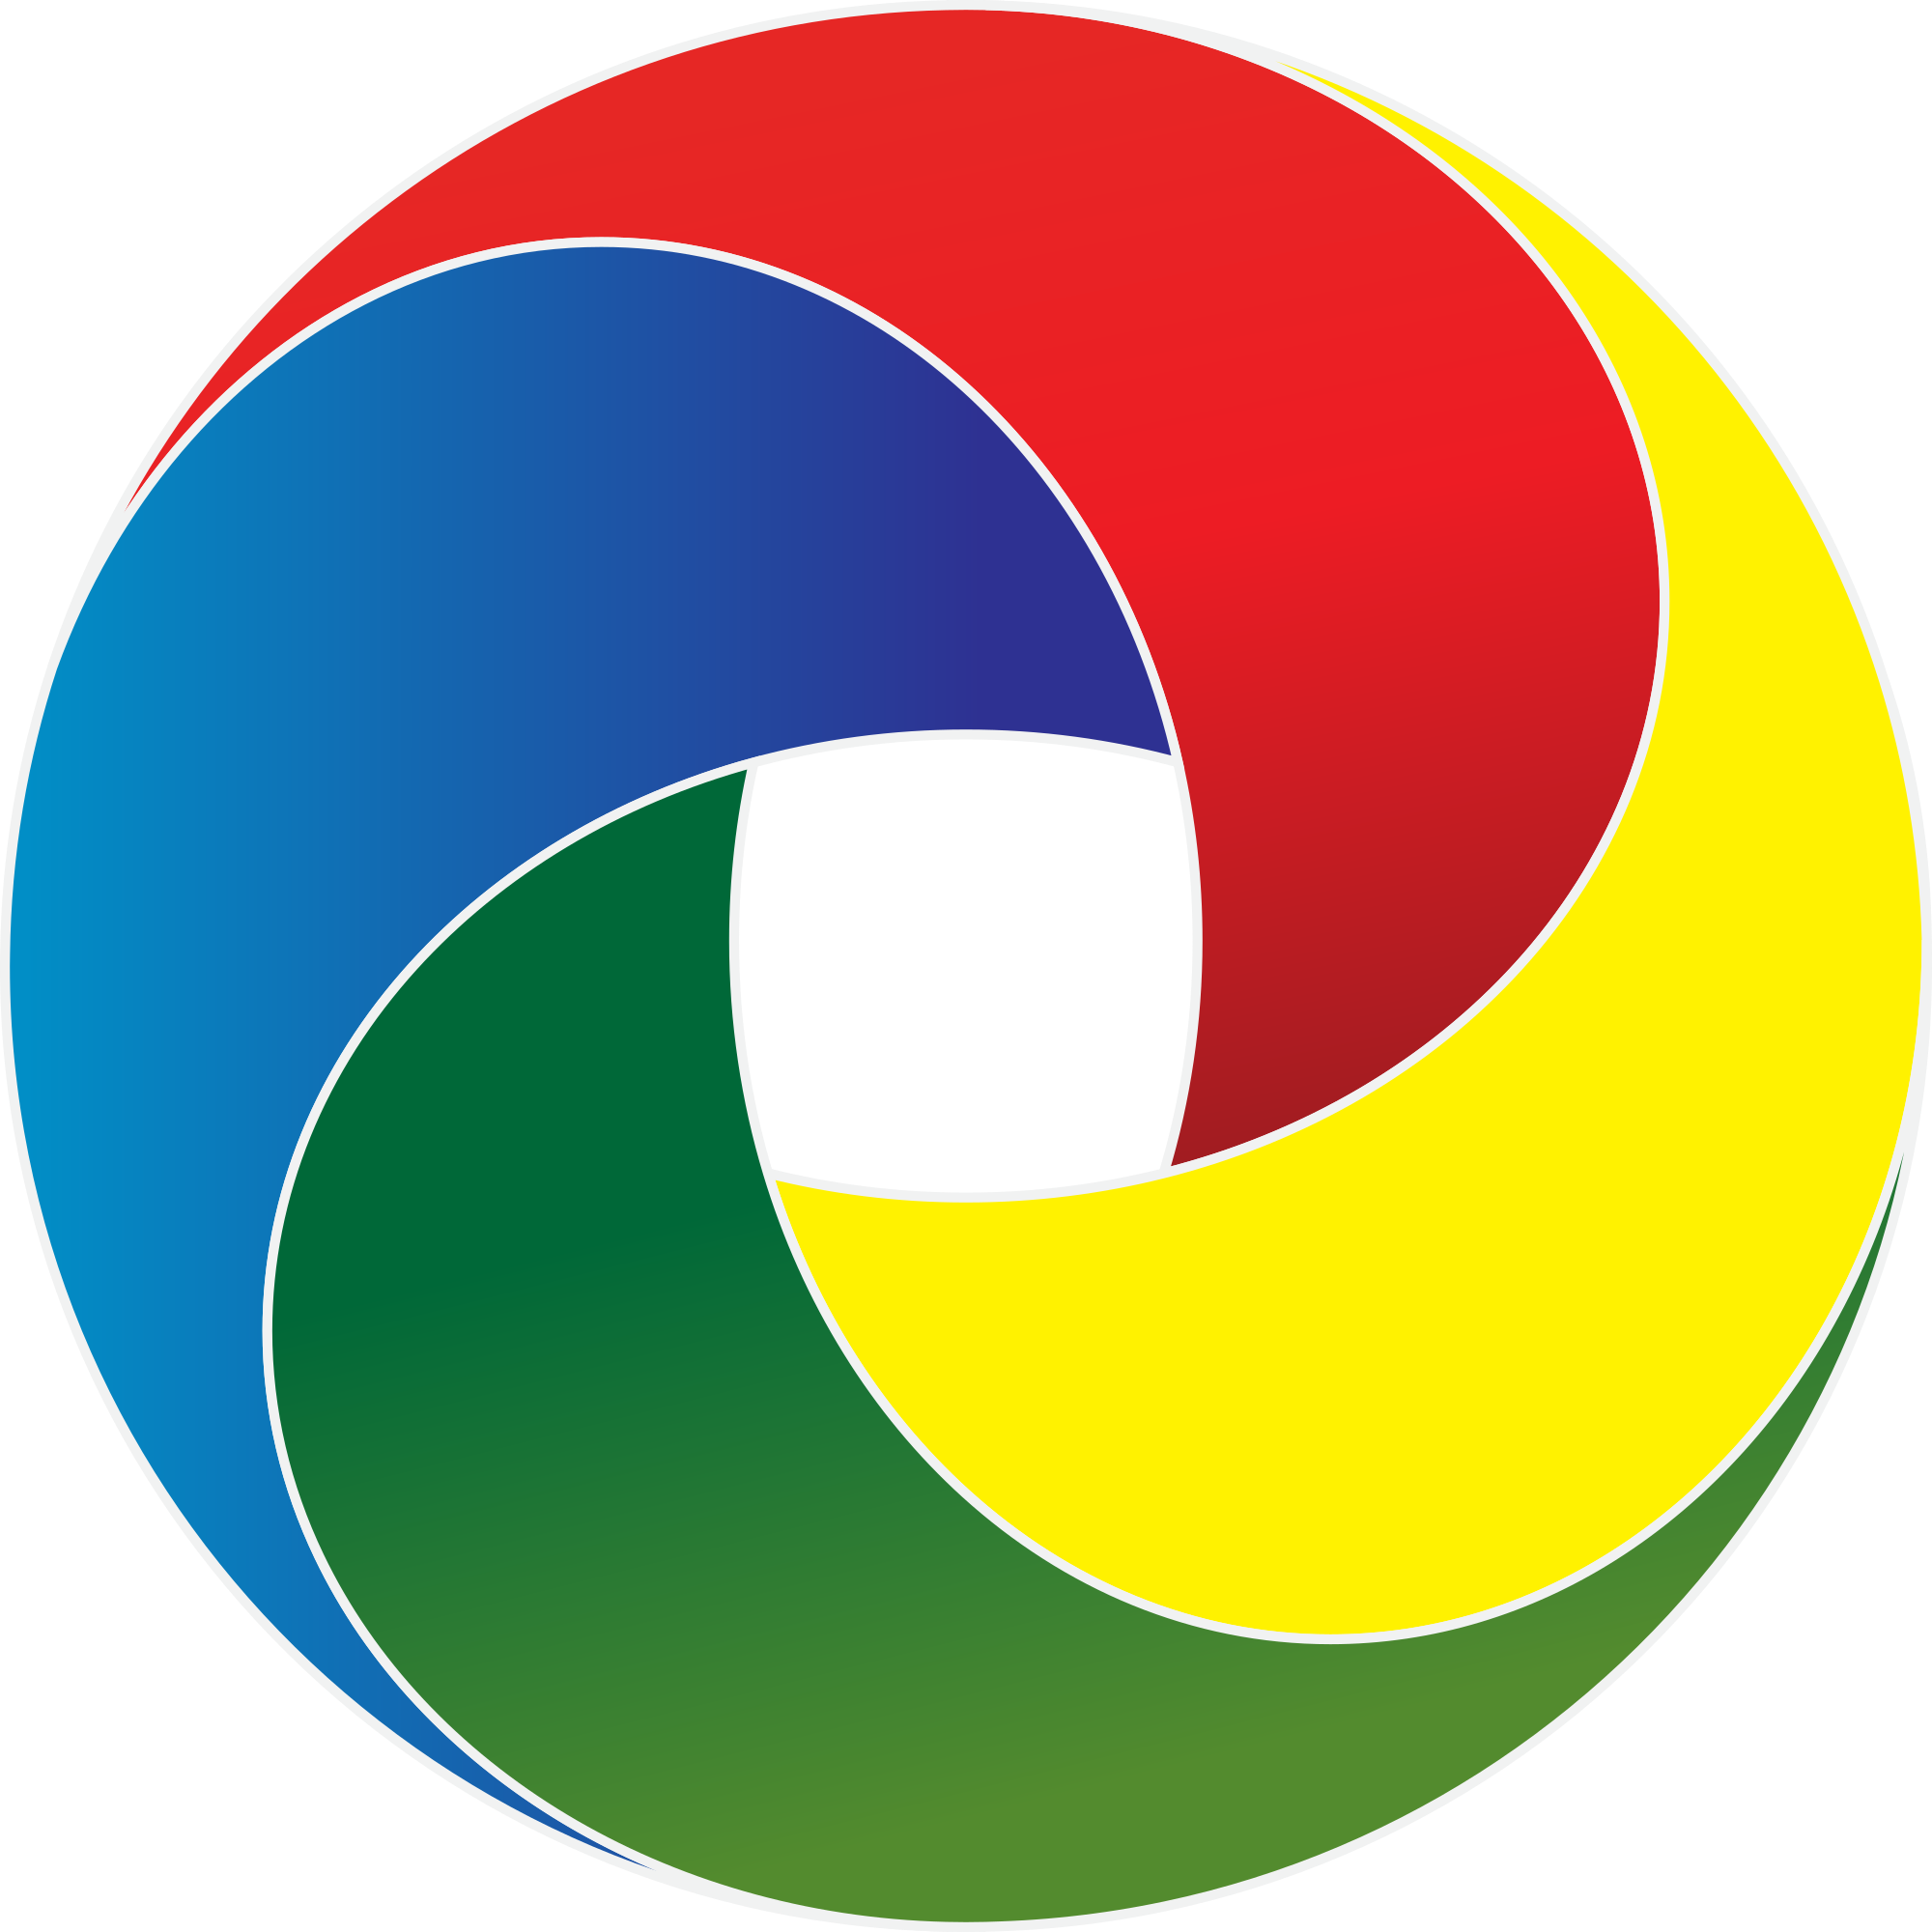 vector graphics - wikipedia